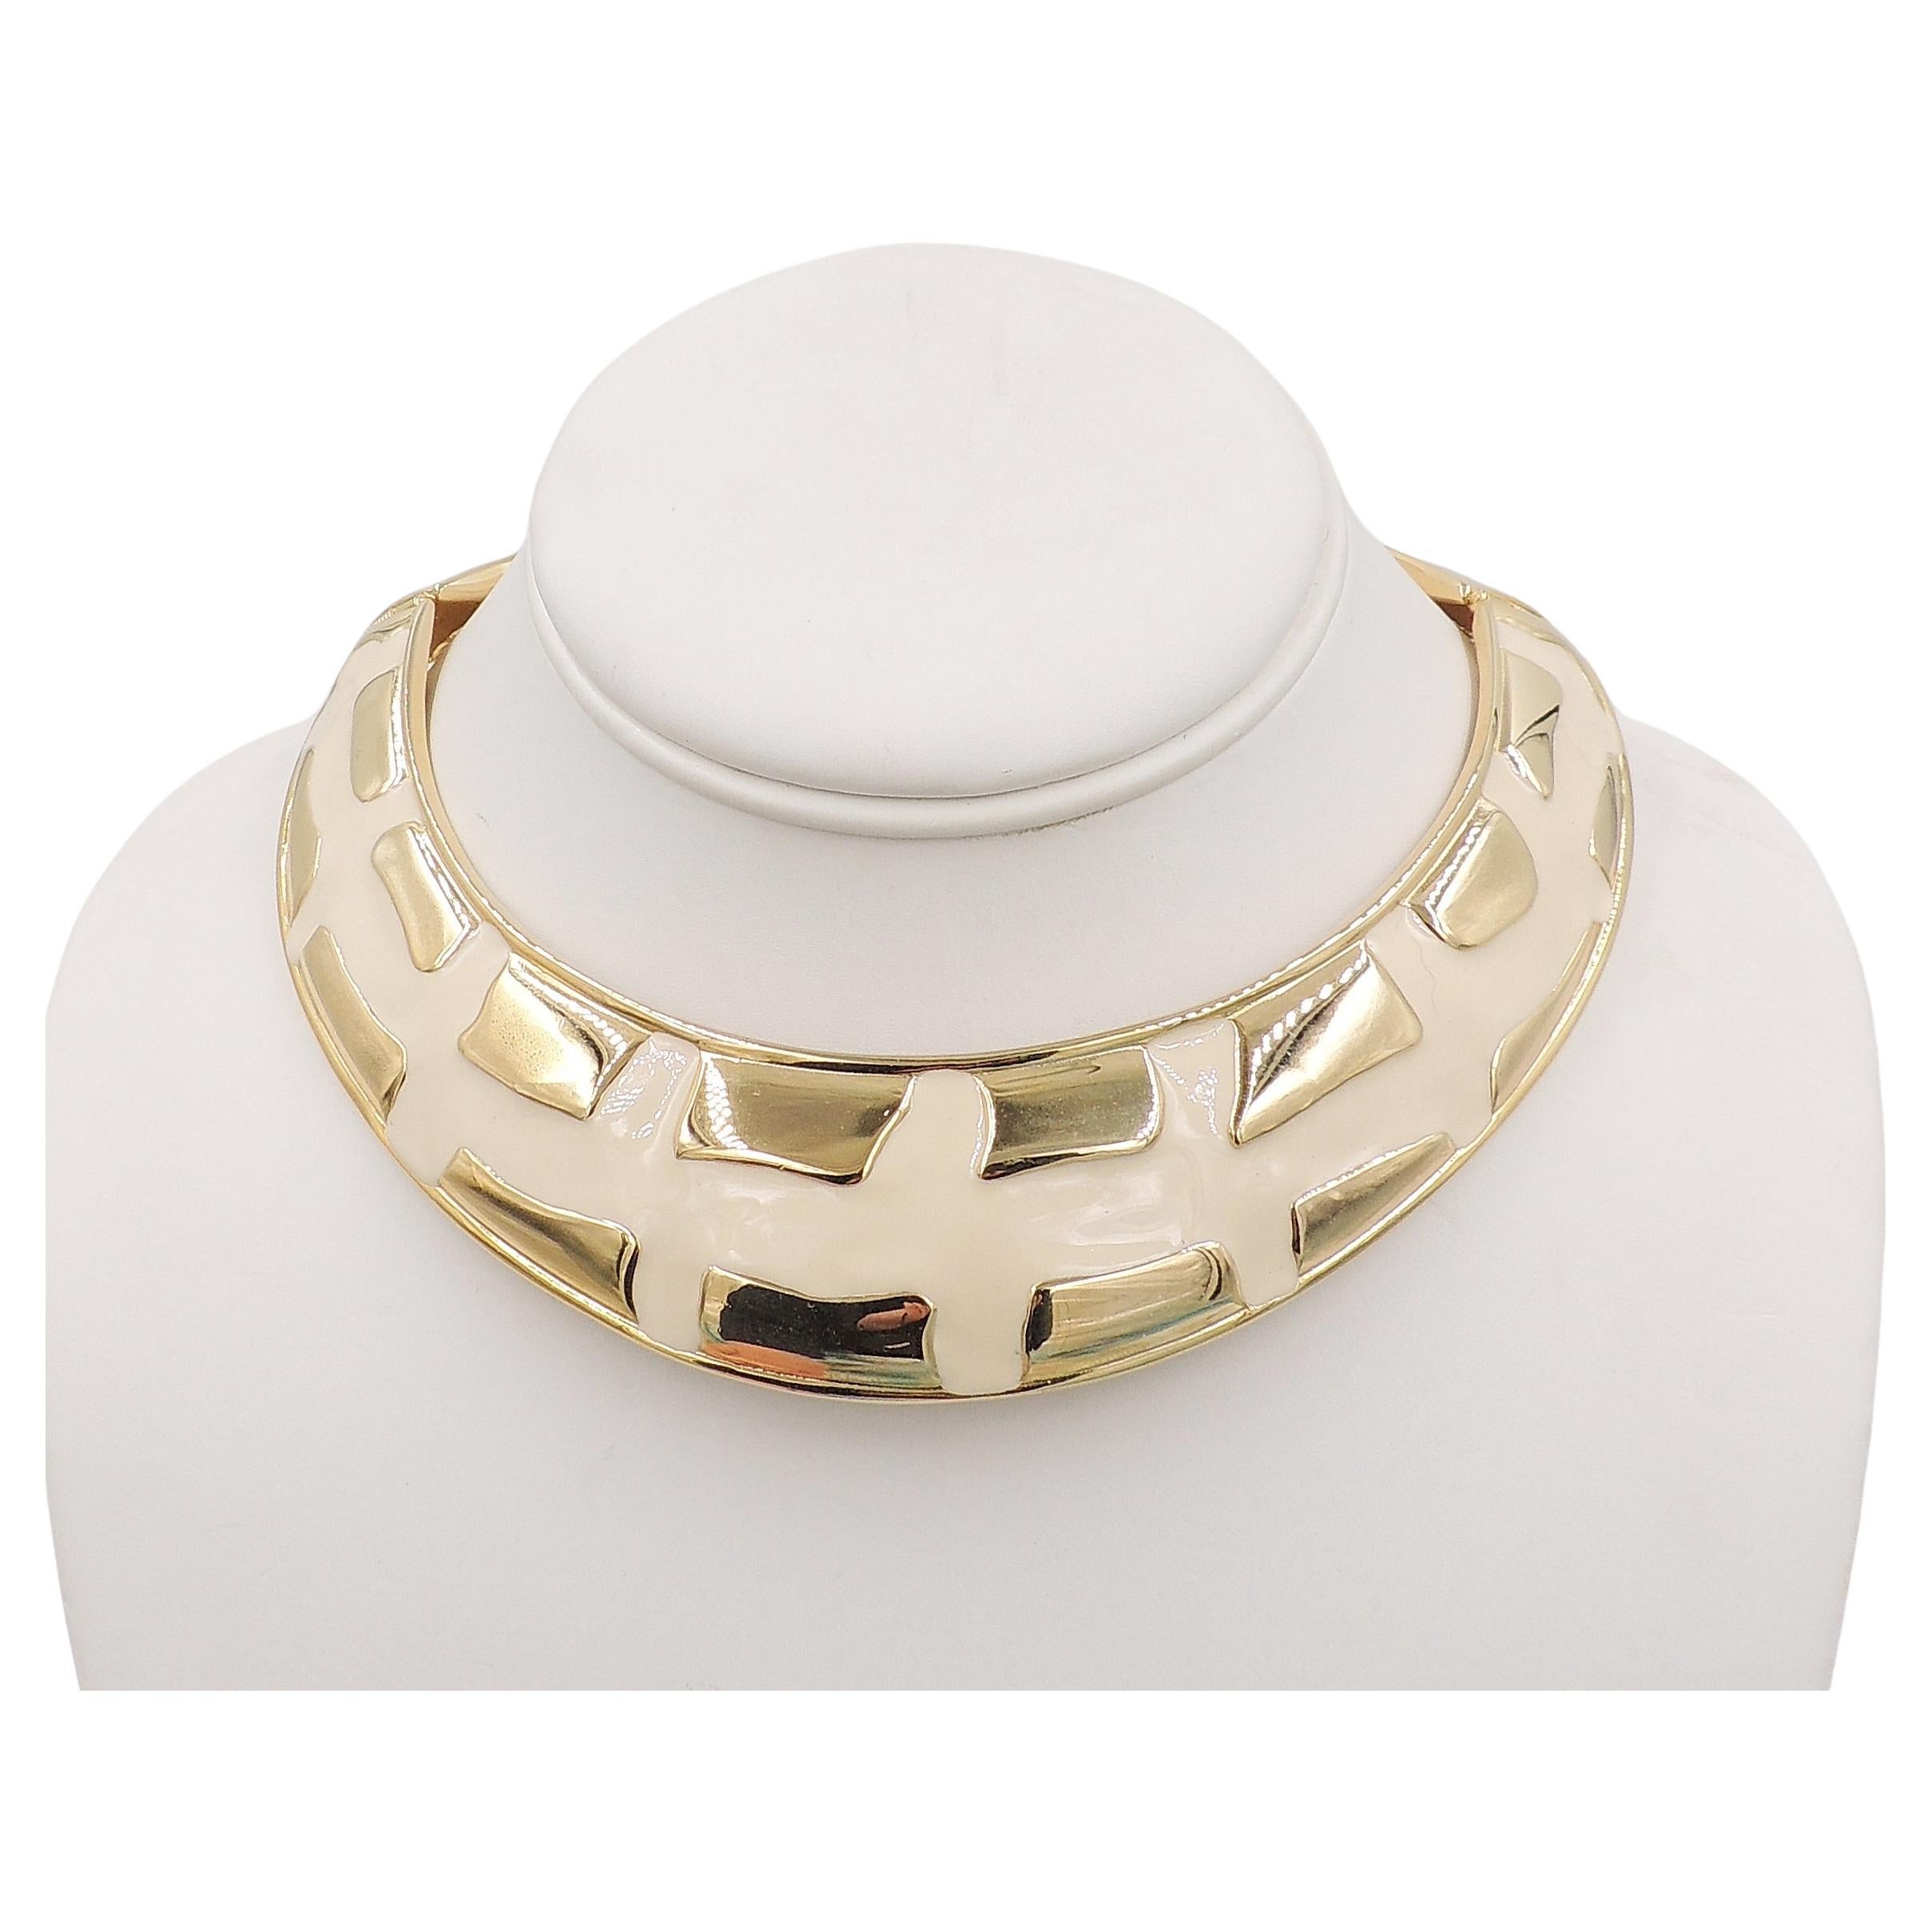 Vintage 1980s Signed Valentino Modernist White Enamel Collar Necklace For Sale